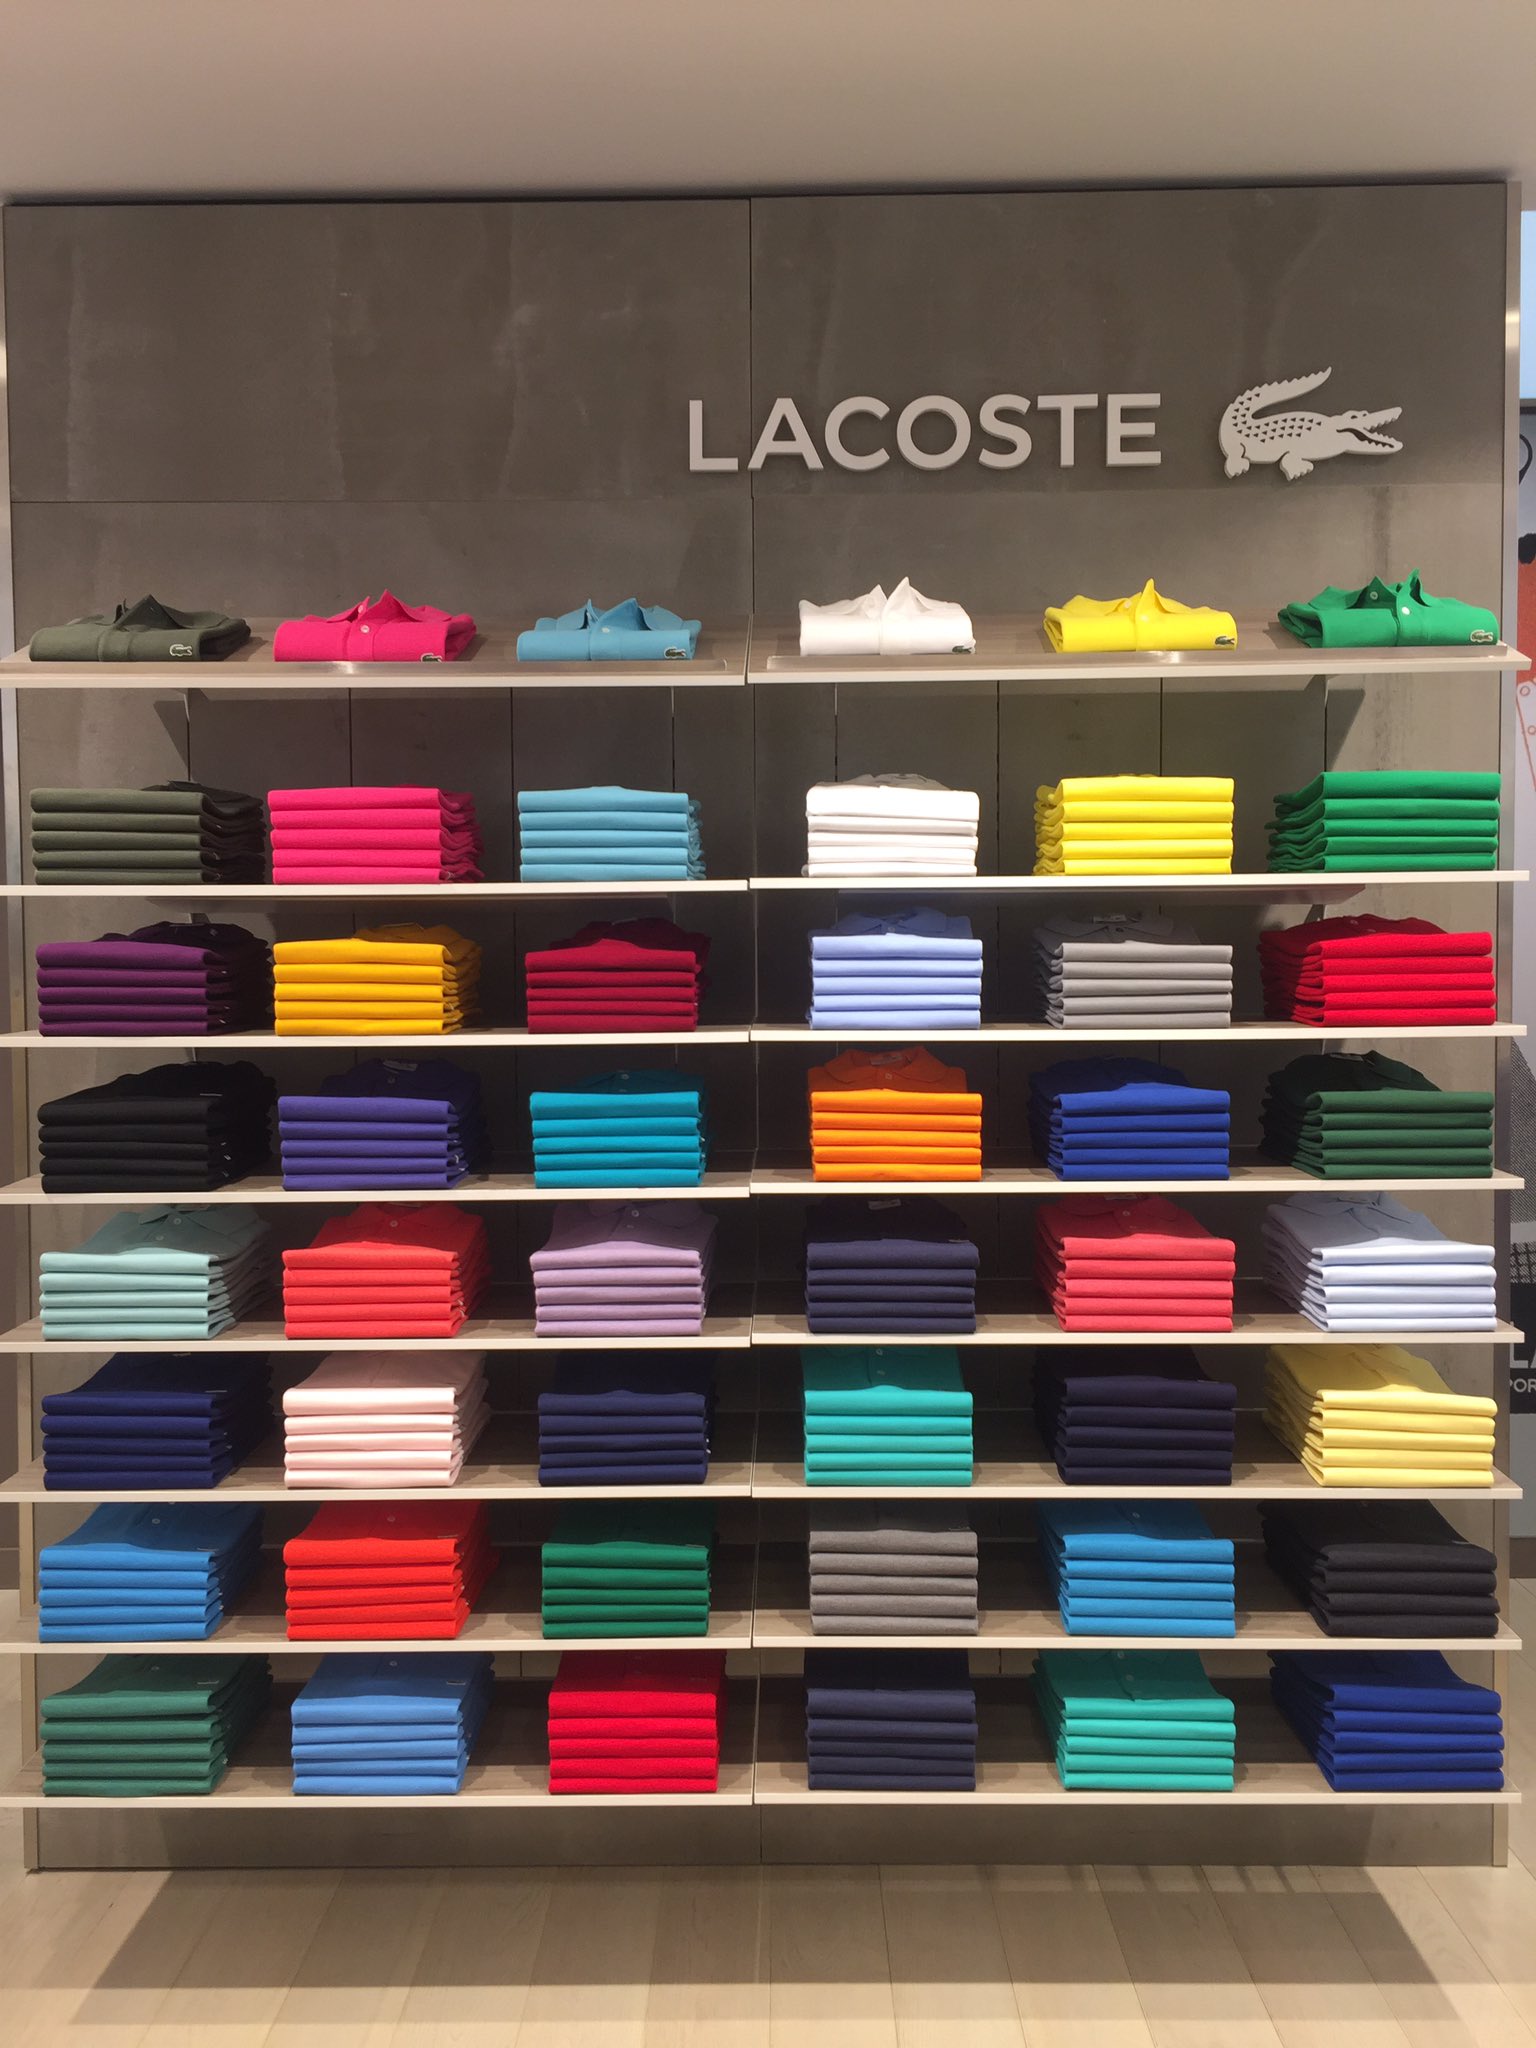 Annelies Versteeg X: "What is your favourite color? #boutique #lacoste # amsterdam #amazingcolors #l1212 #polo https://t.co/XdXpdy2zxM" / X